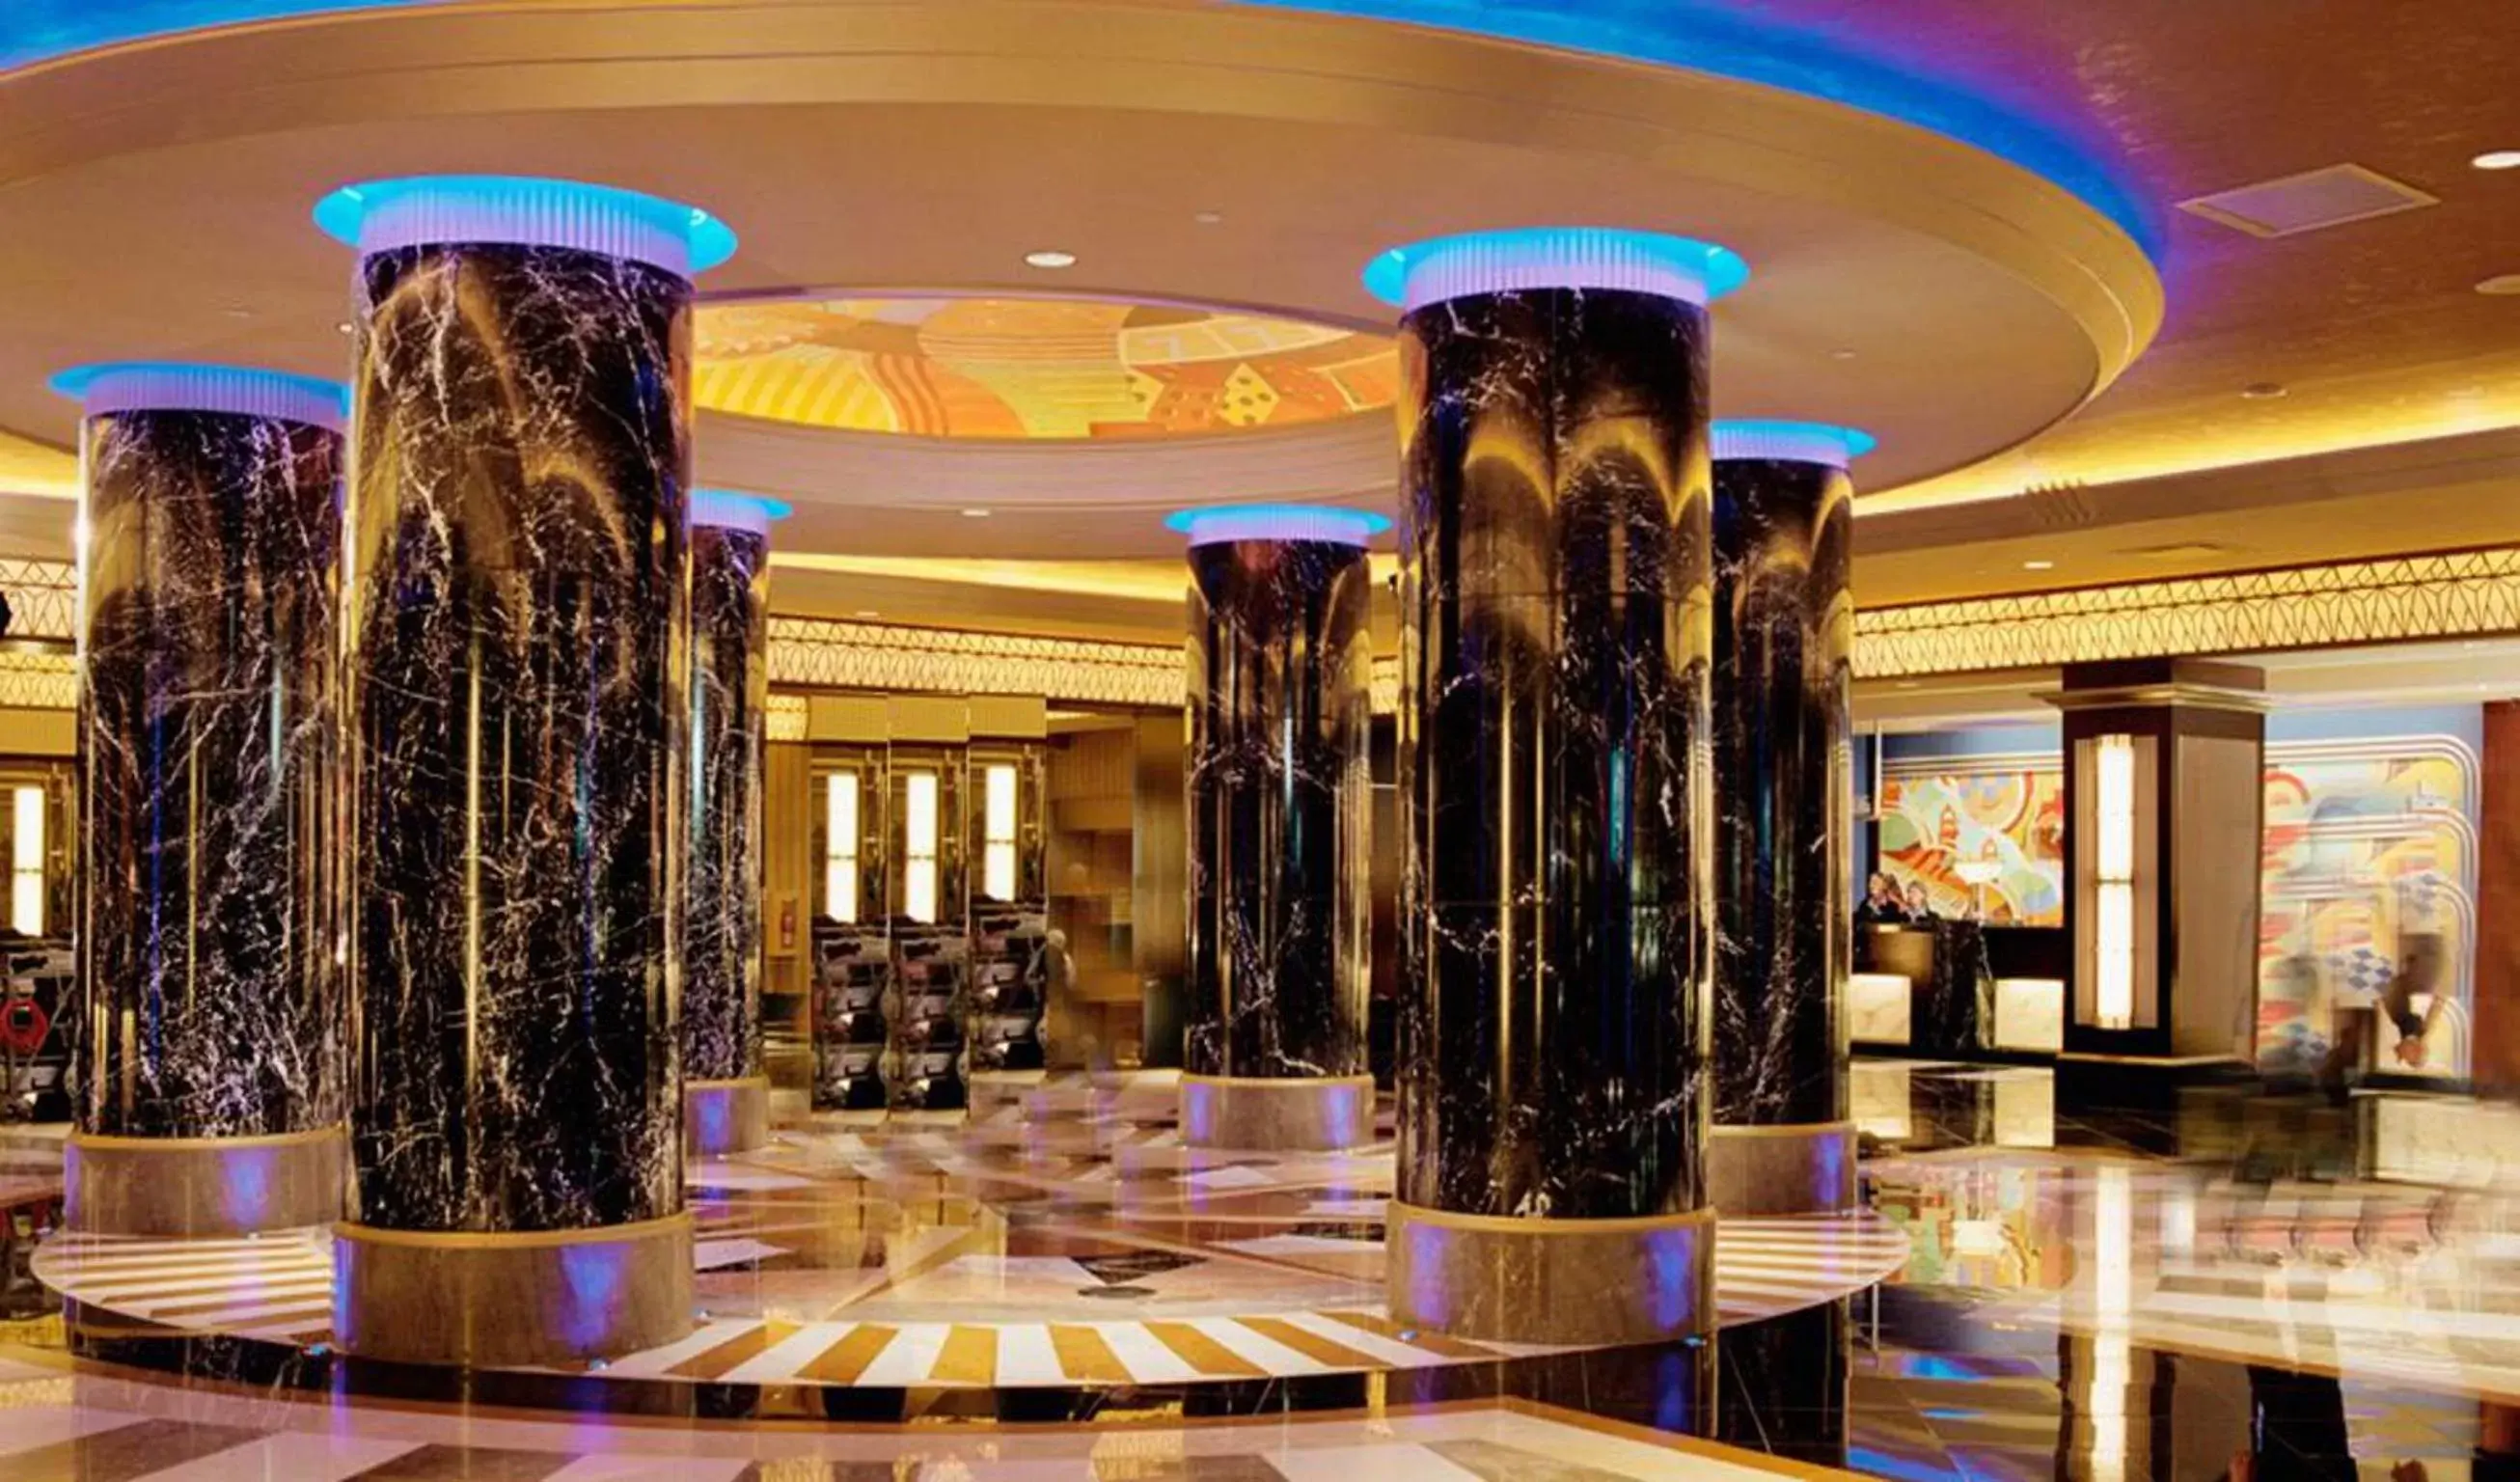 Lobby or reception in Resorts Casino Hotel Atlantic City